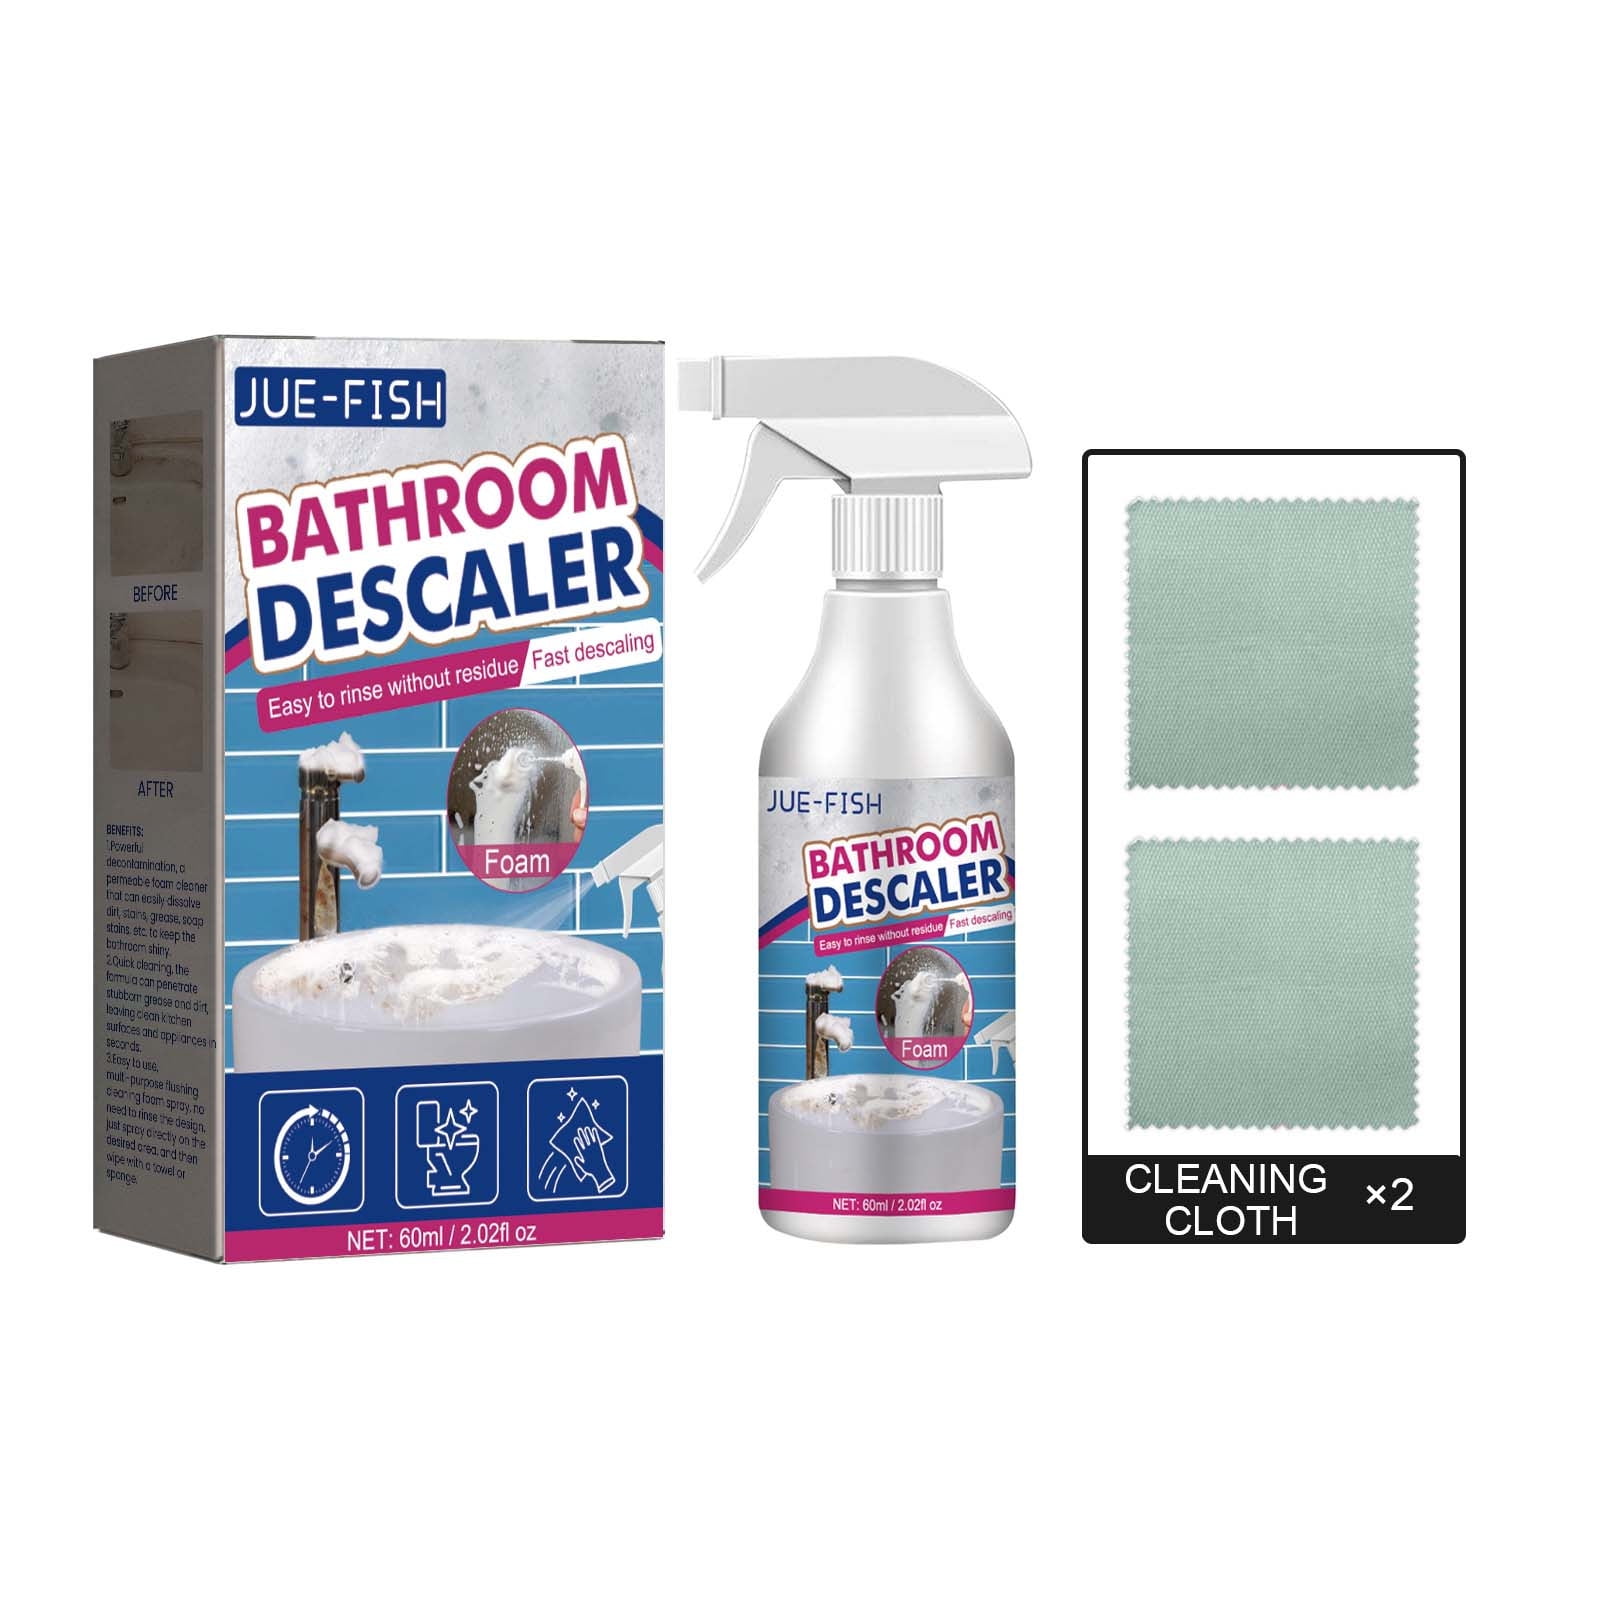 Rejuvenate Scrub Free Soap Scum Remover Shower Glass Door Cleaner Works on  Ceramic Tile, Chrome, Plastic and More 24oz